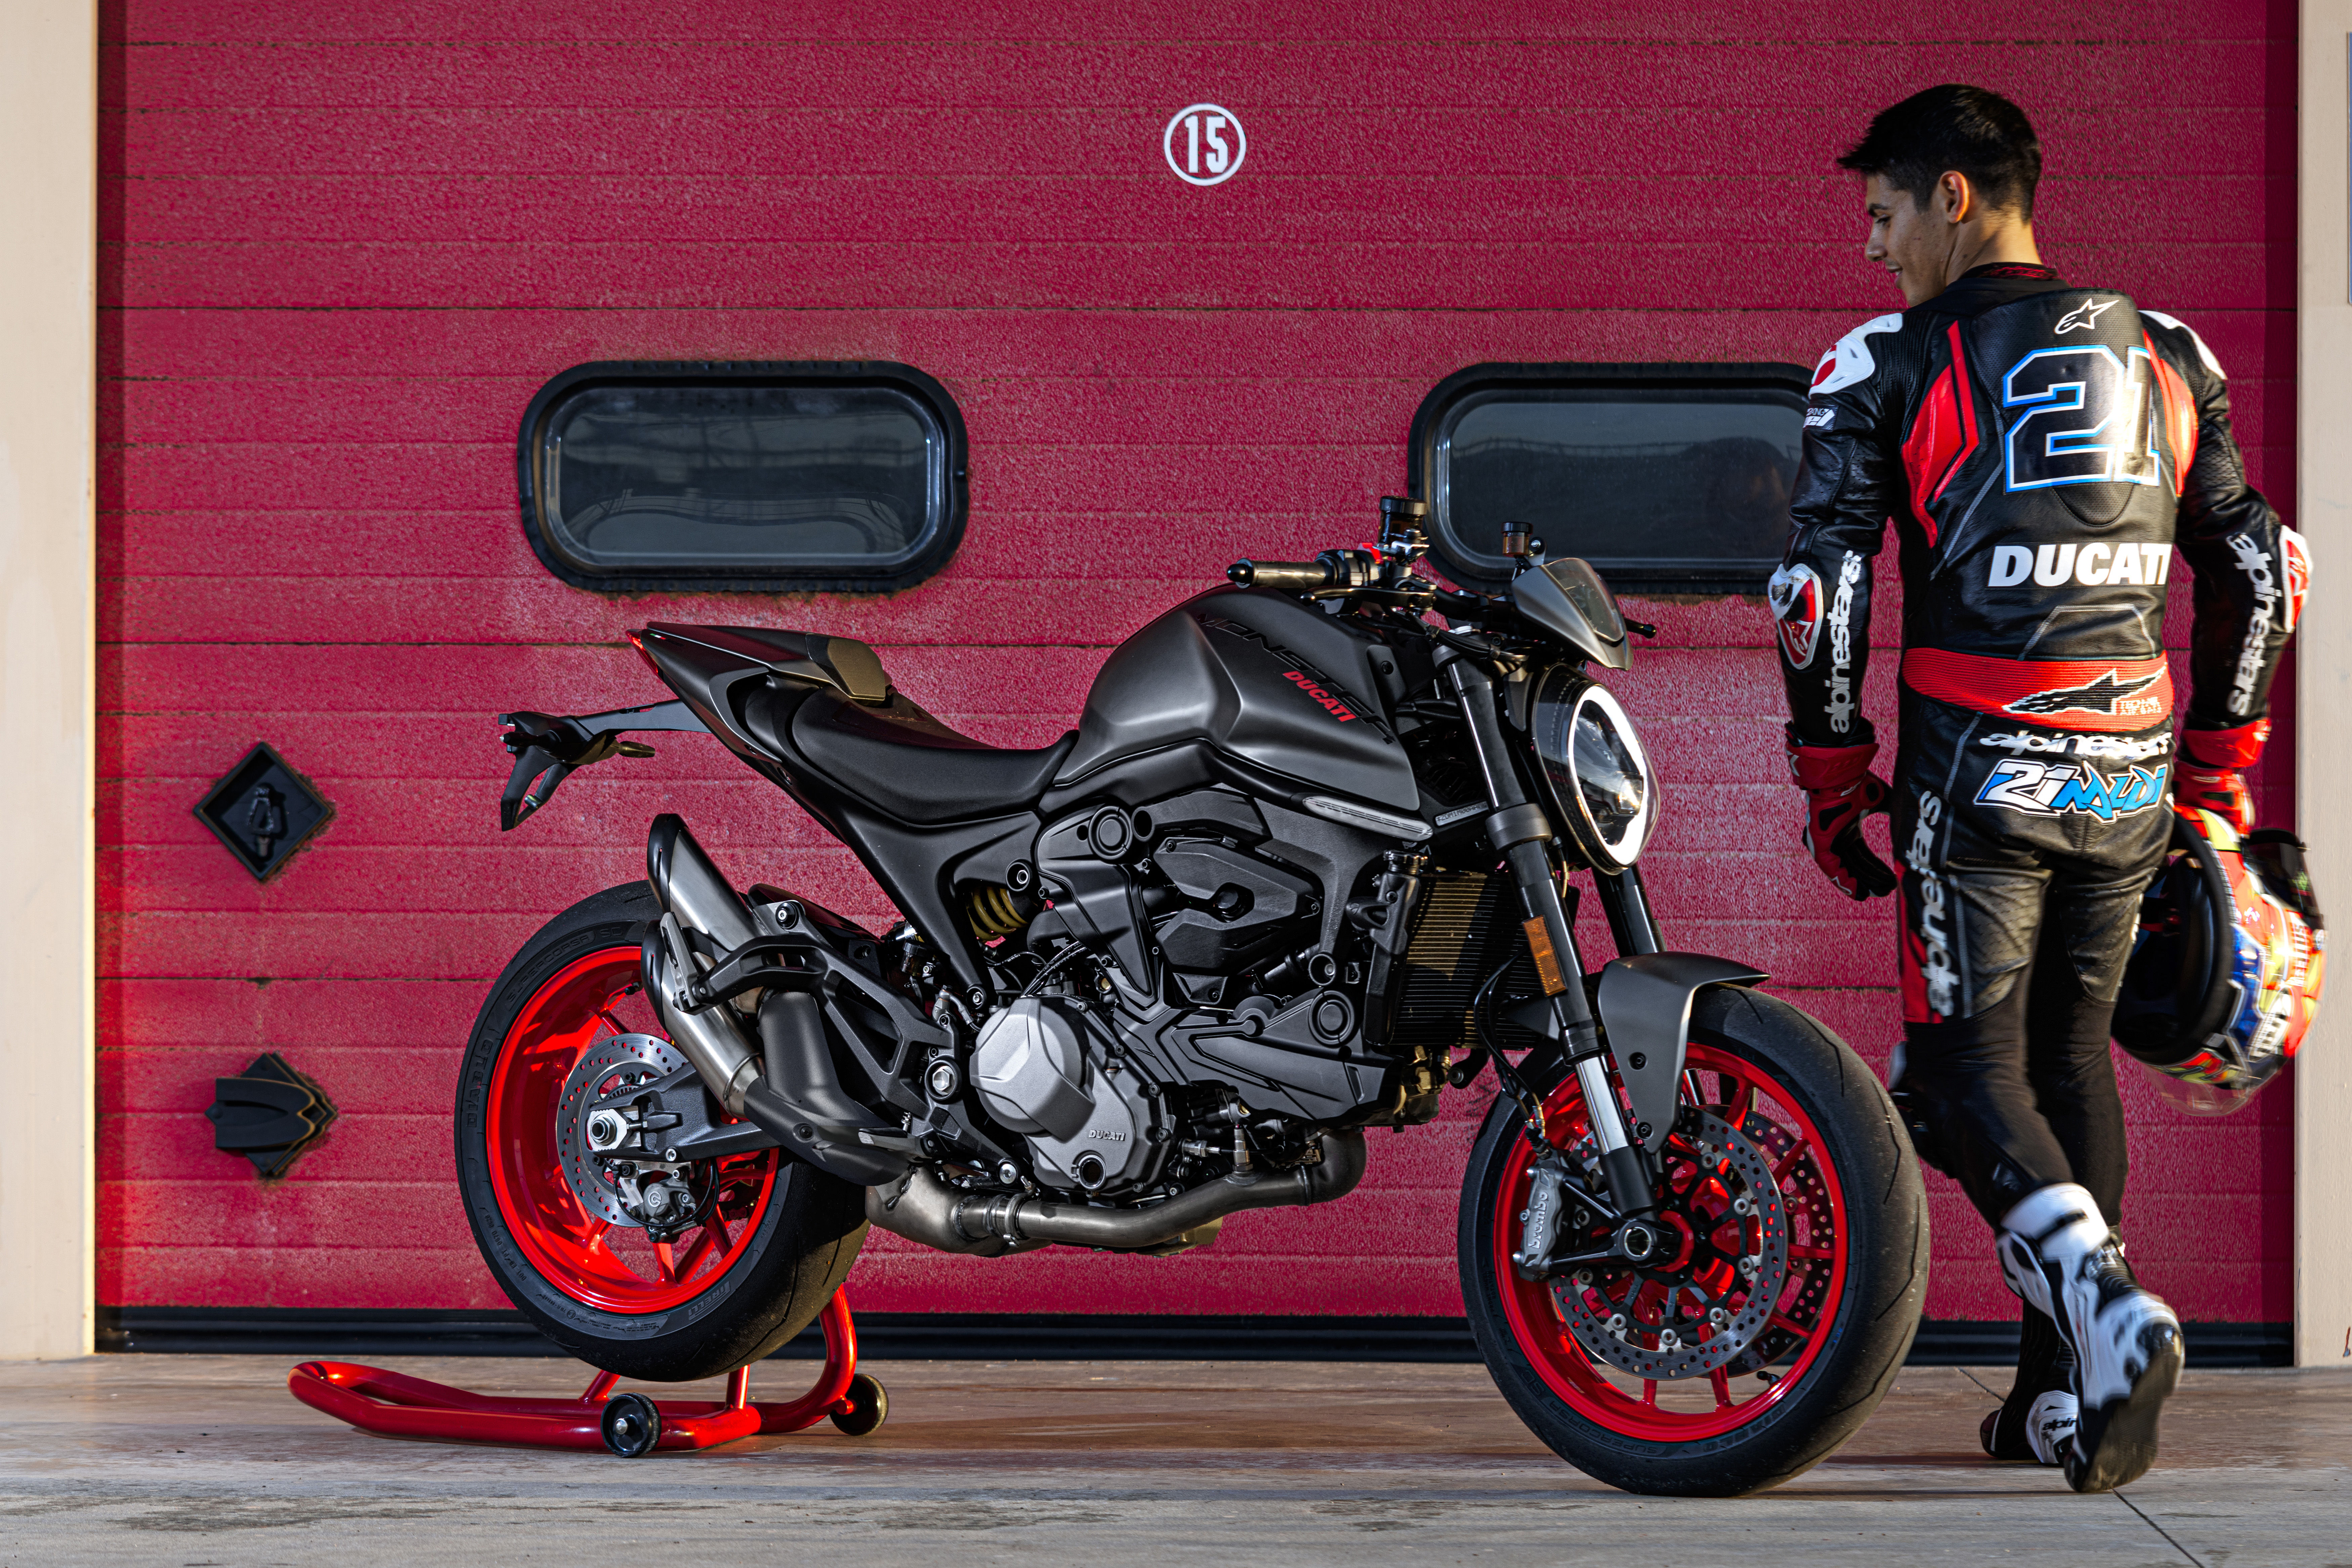 2021 Ducati Monster: Image Gallery